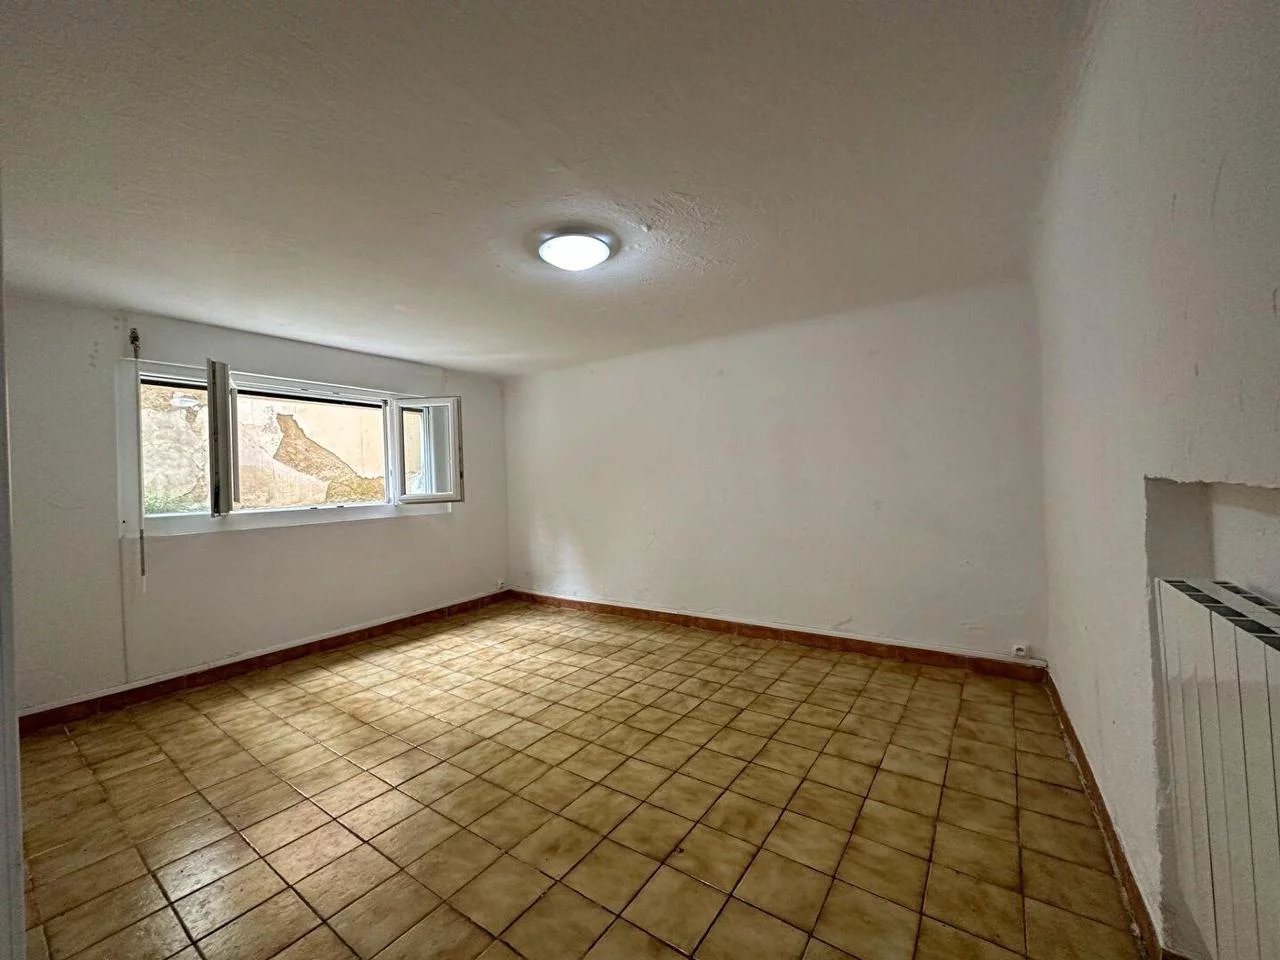 Appartement  1 Locali 23.55m2  In vendita    85 000 €